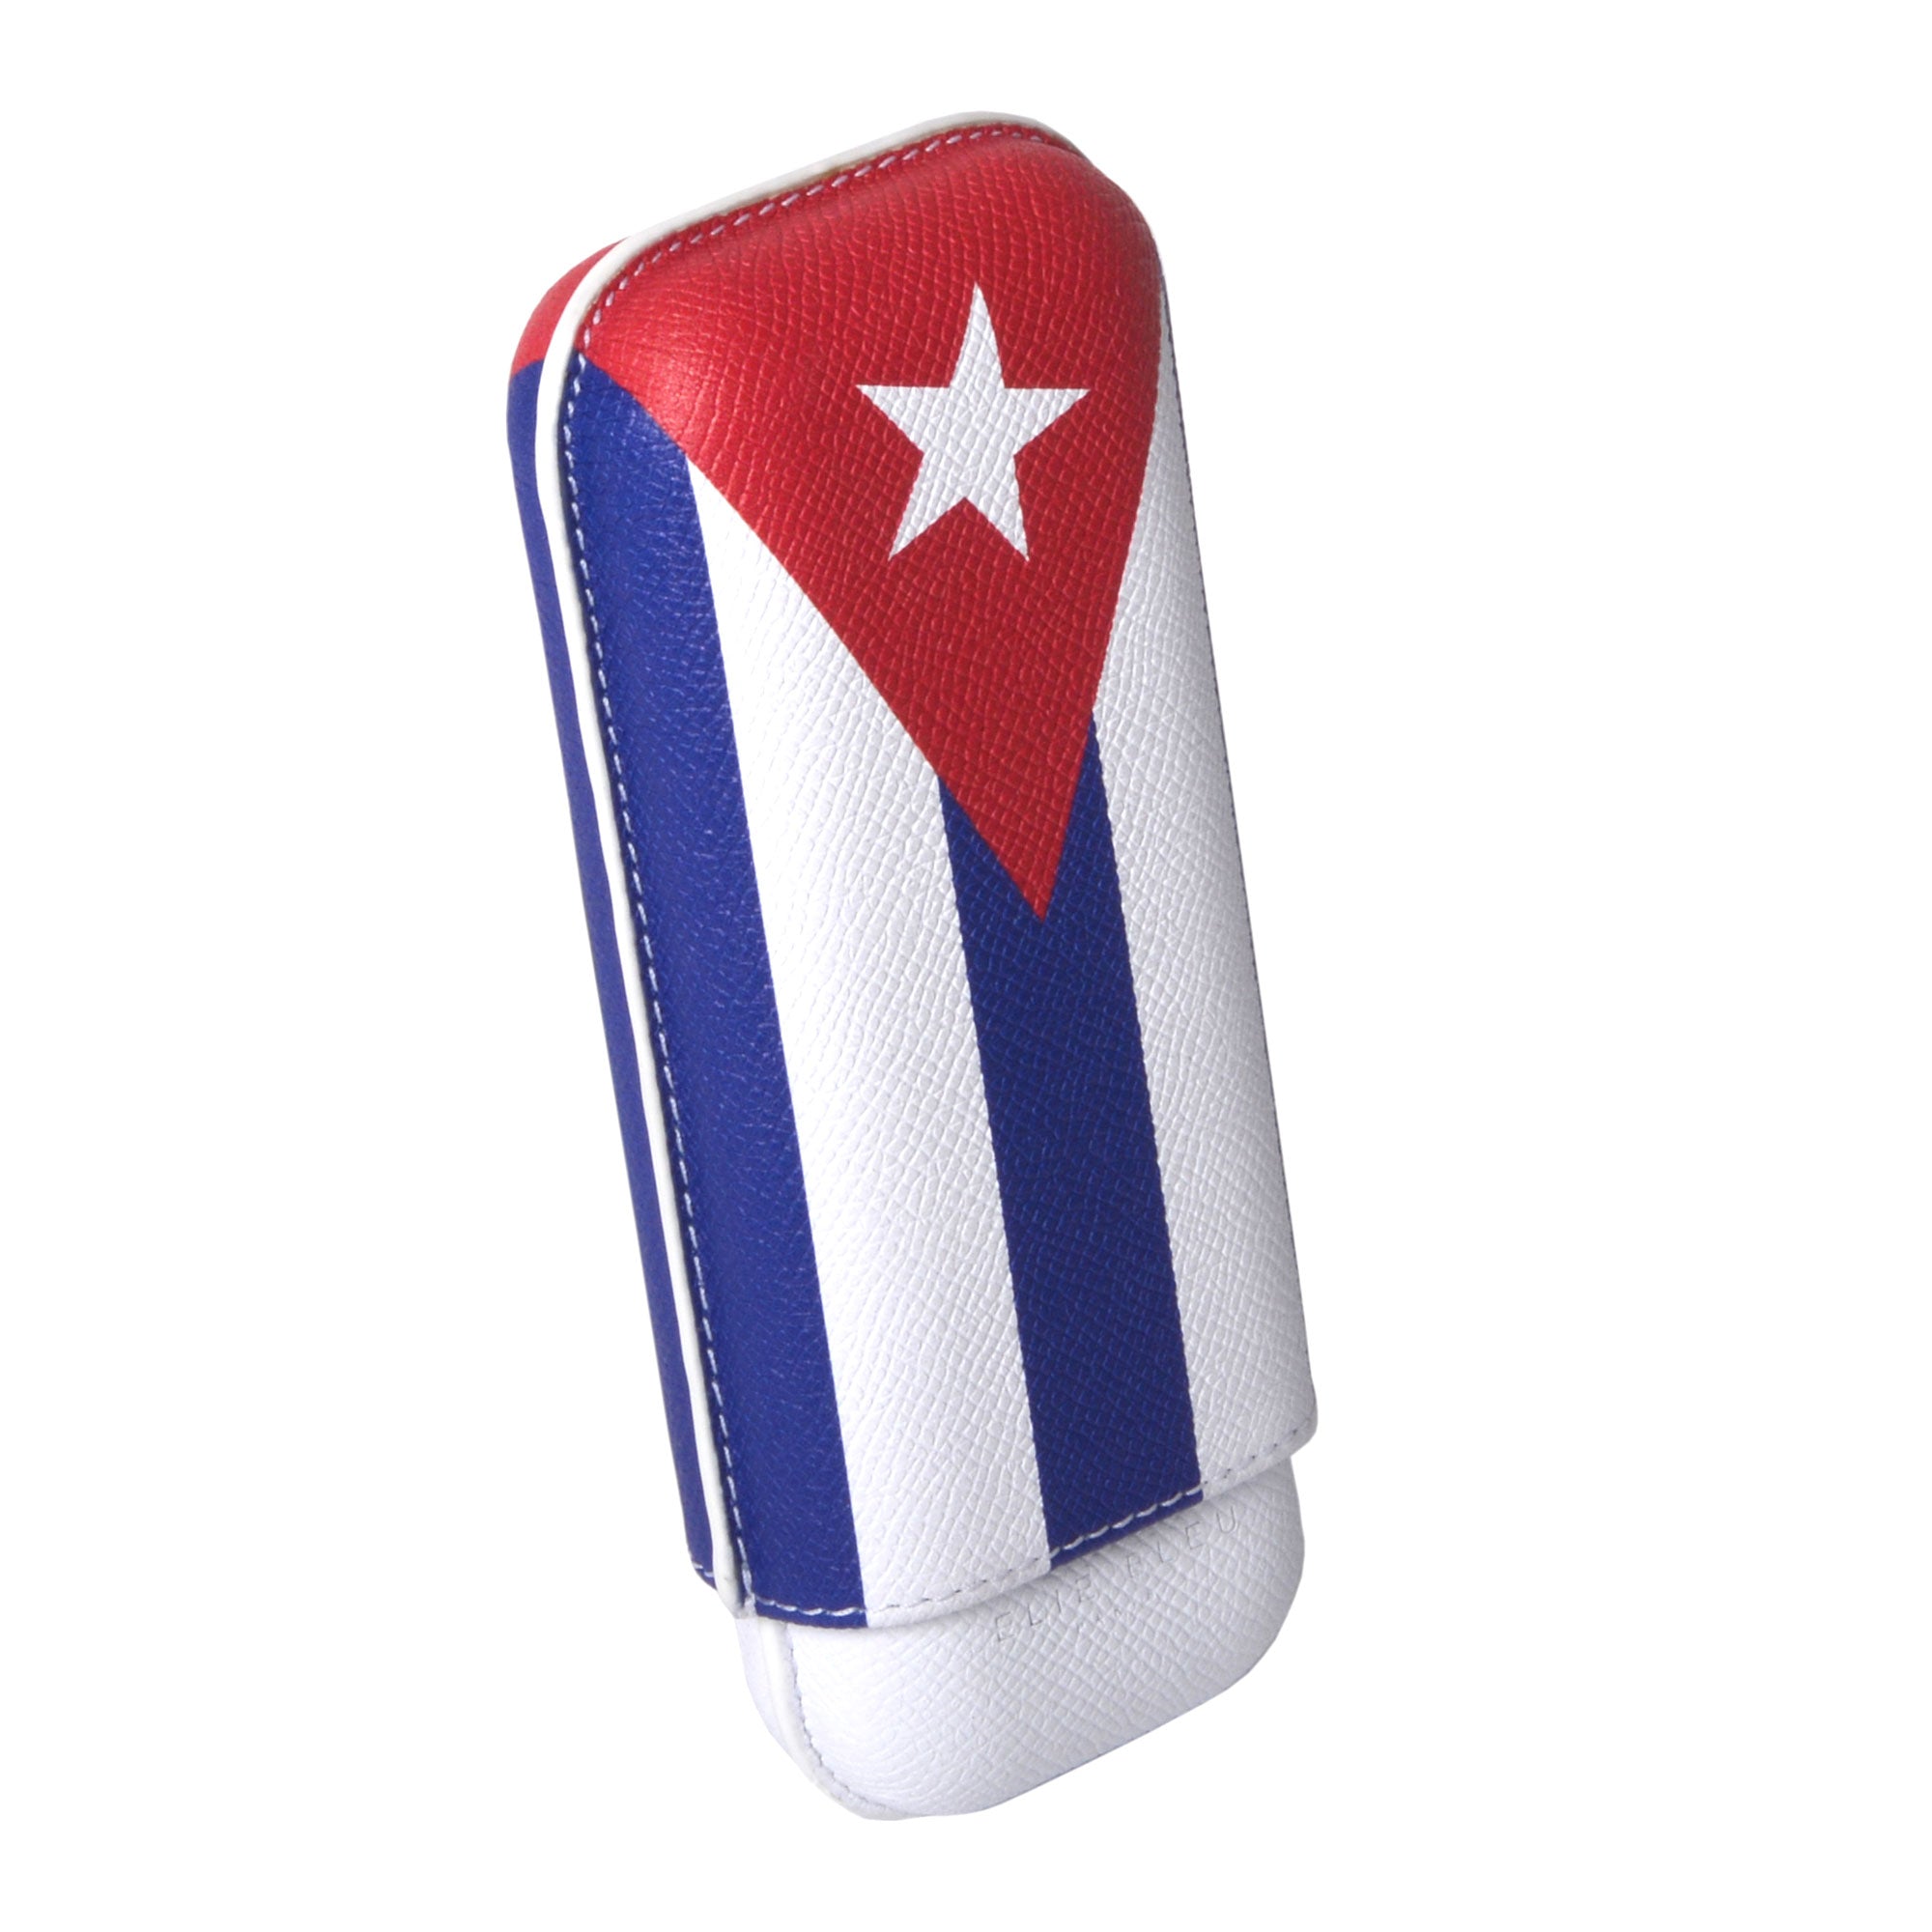 Cuban Flag Cigar Case - 2 Cigars caliber 27